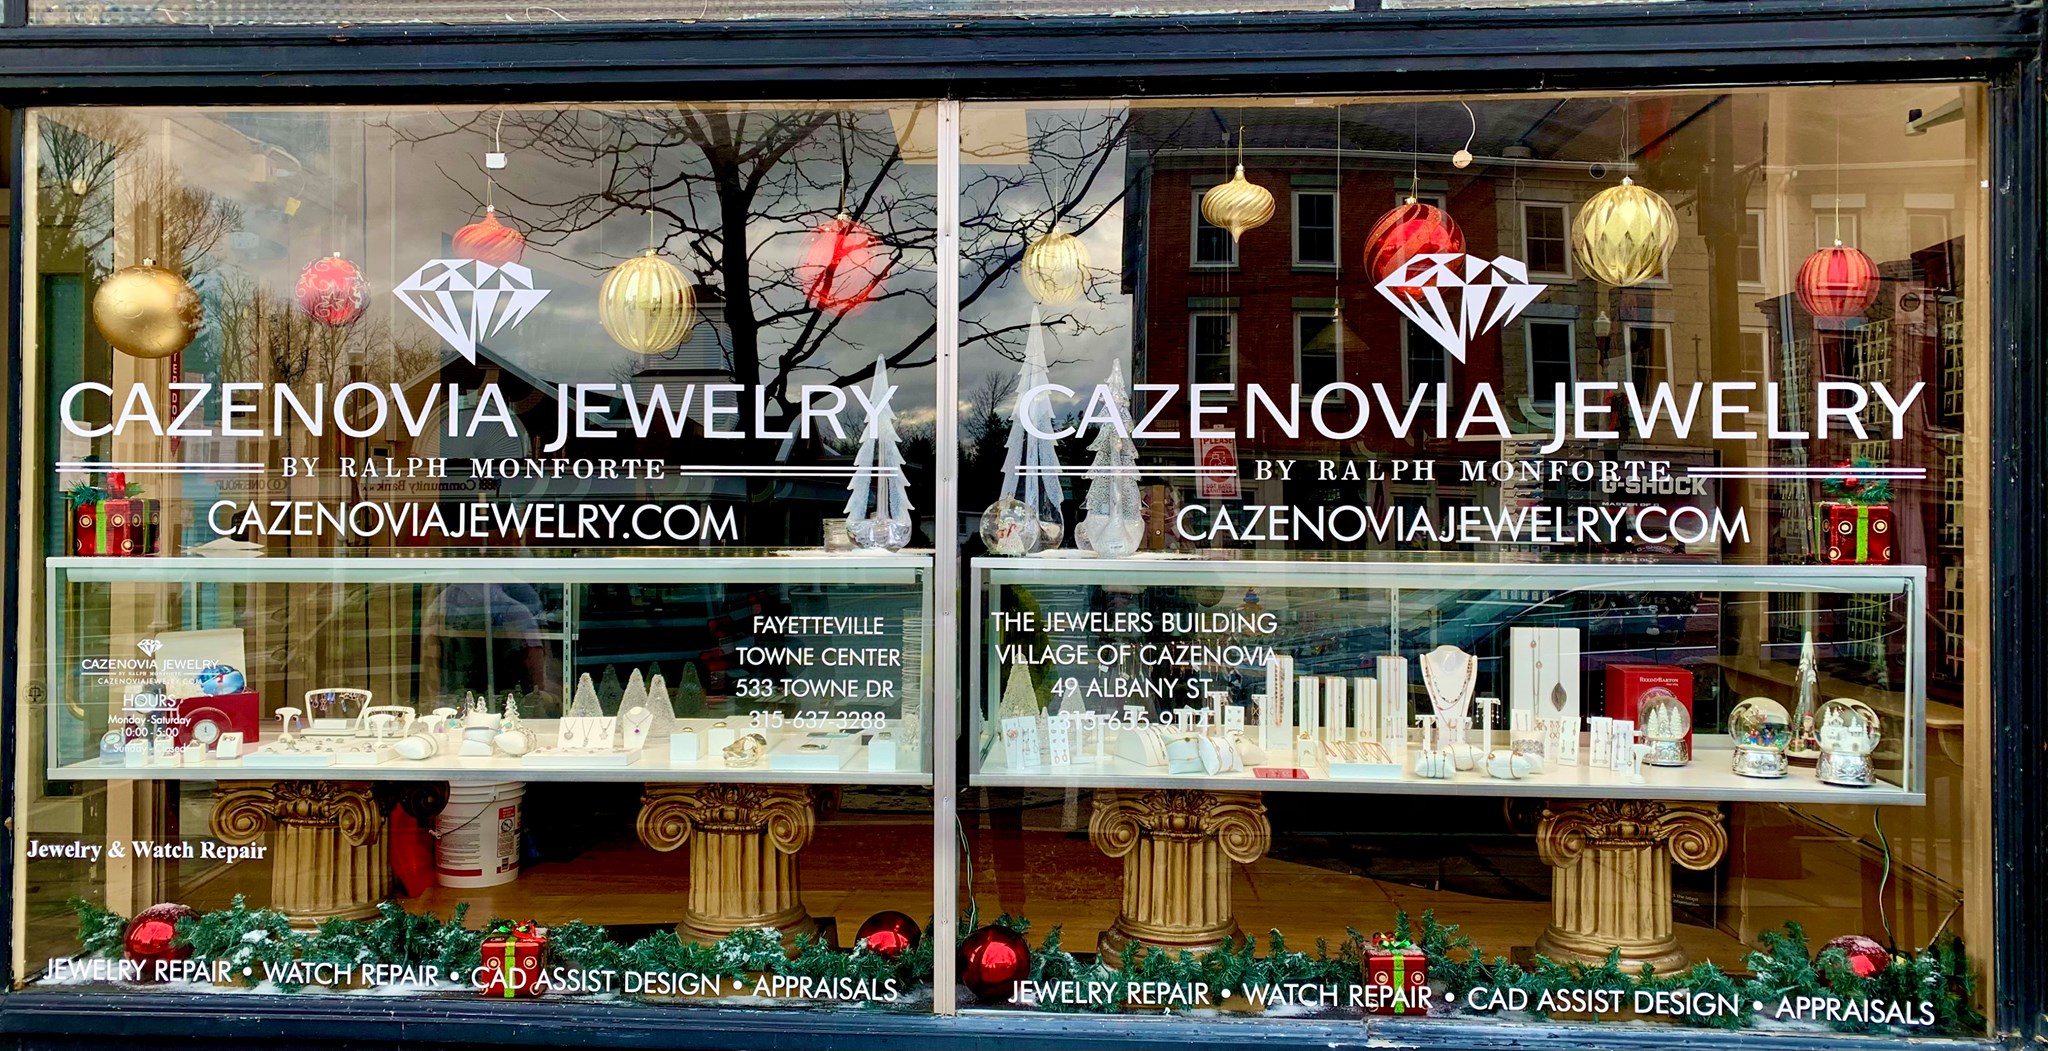 Cazenovia Jewelry